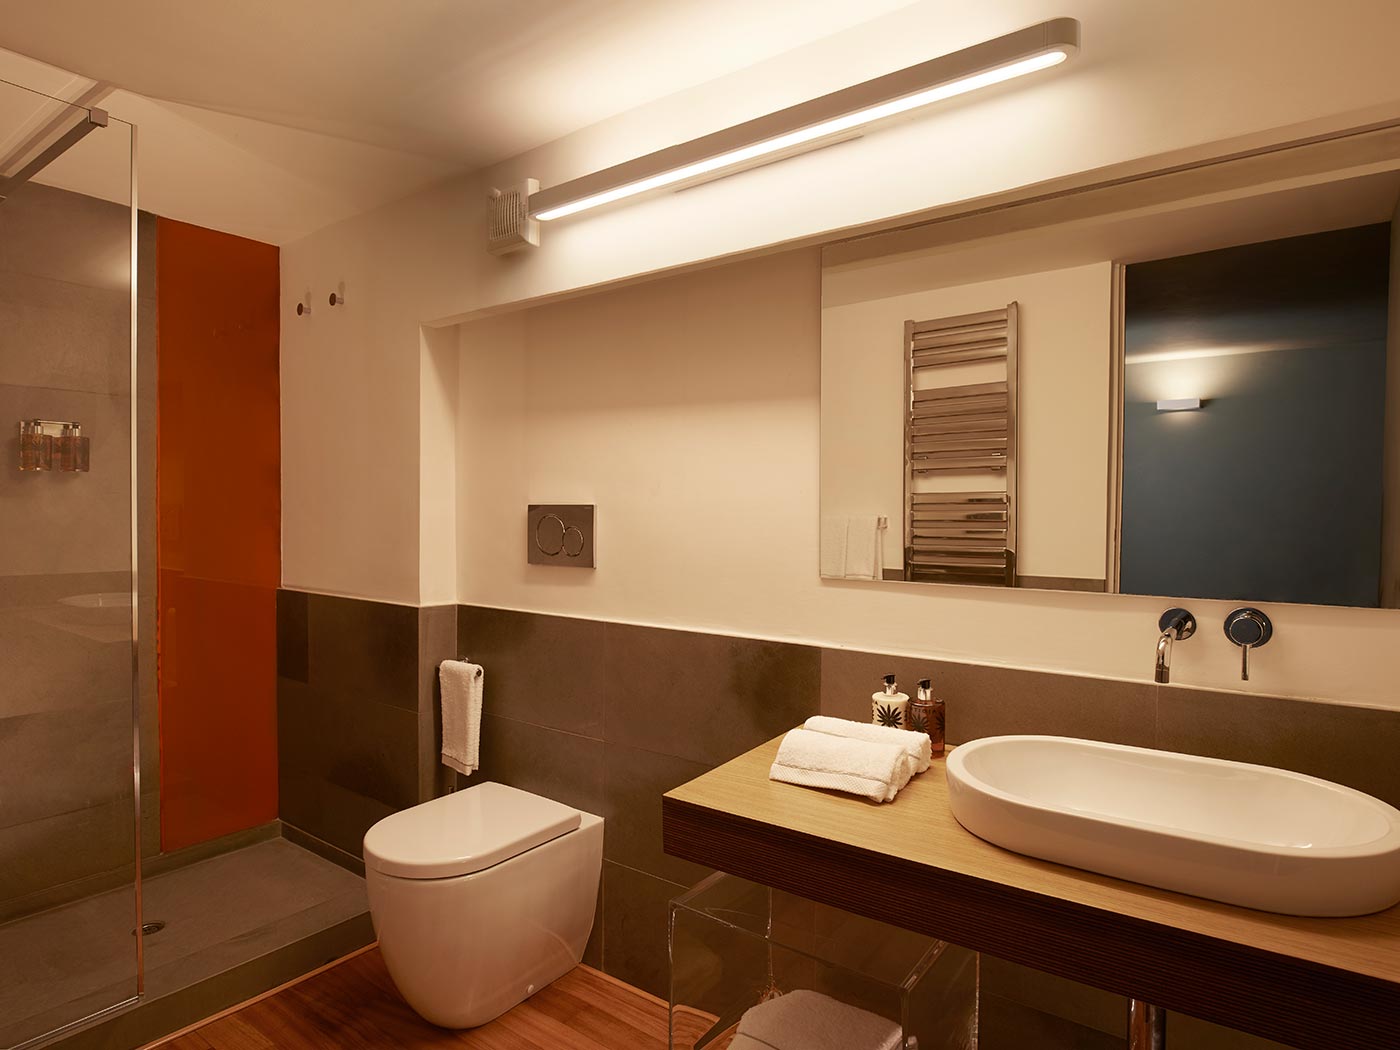 apartment for rent in viterbo - bathroom